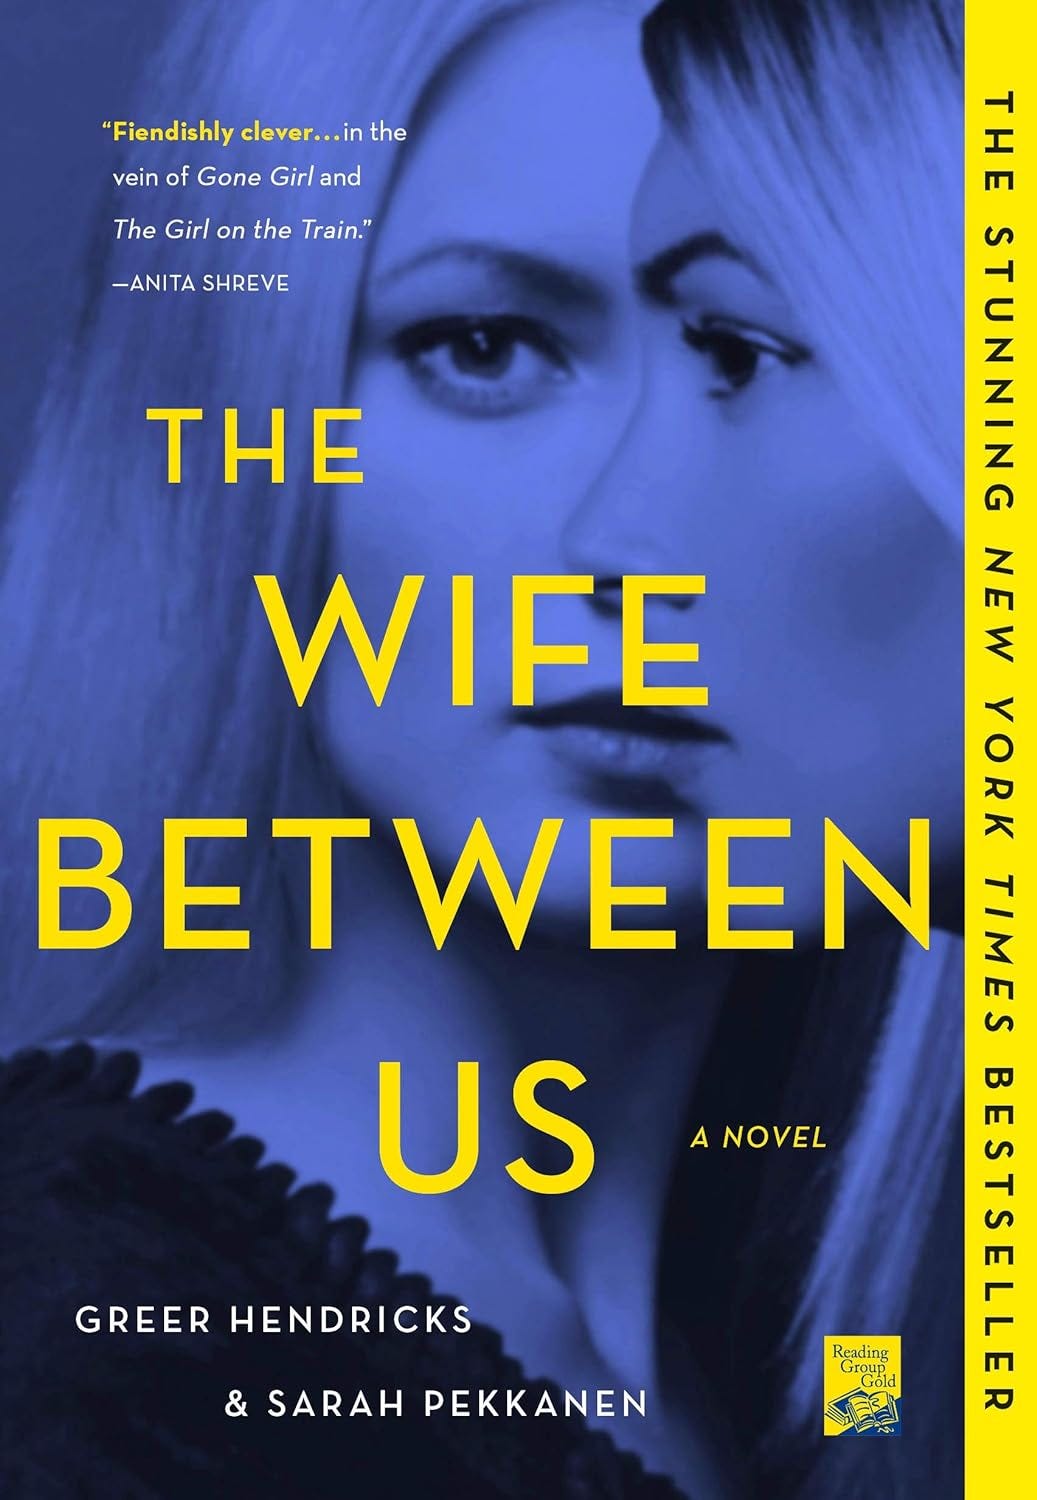 'The Wife Between Us'